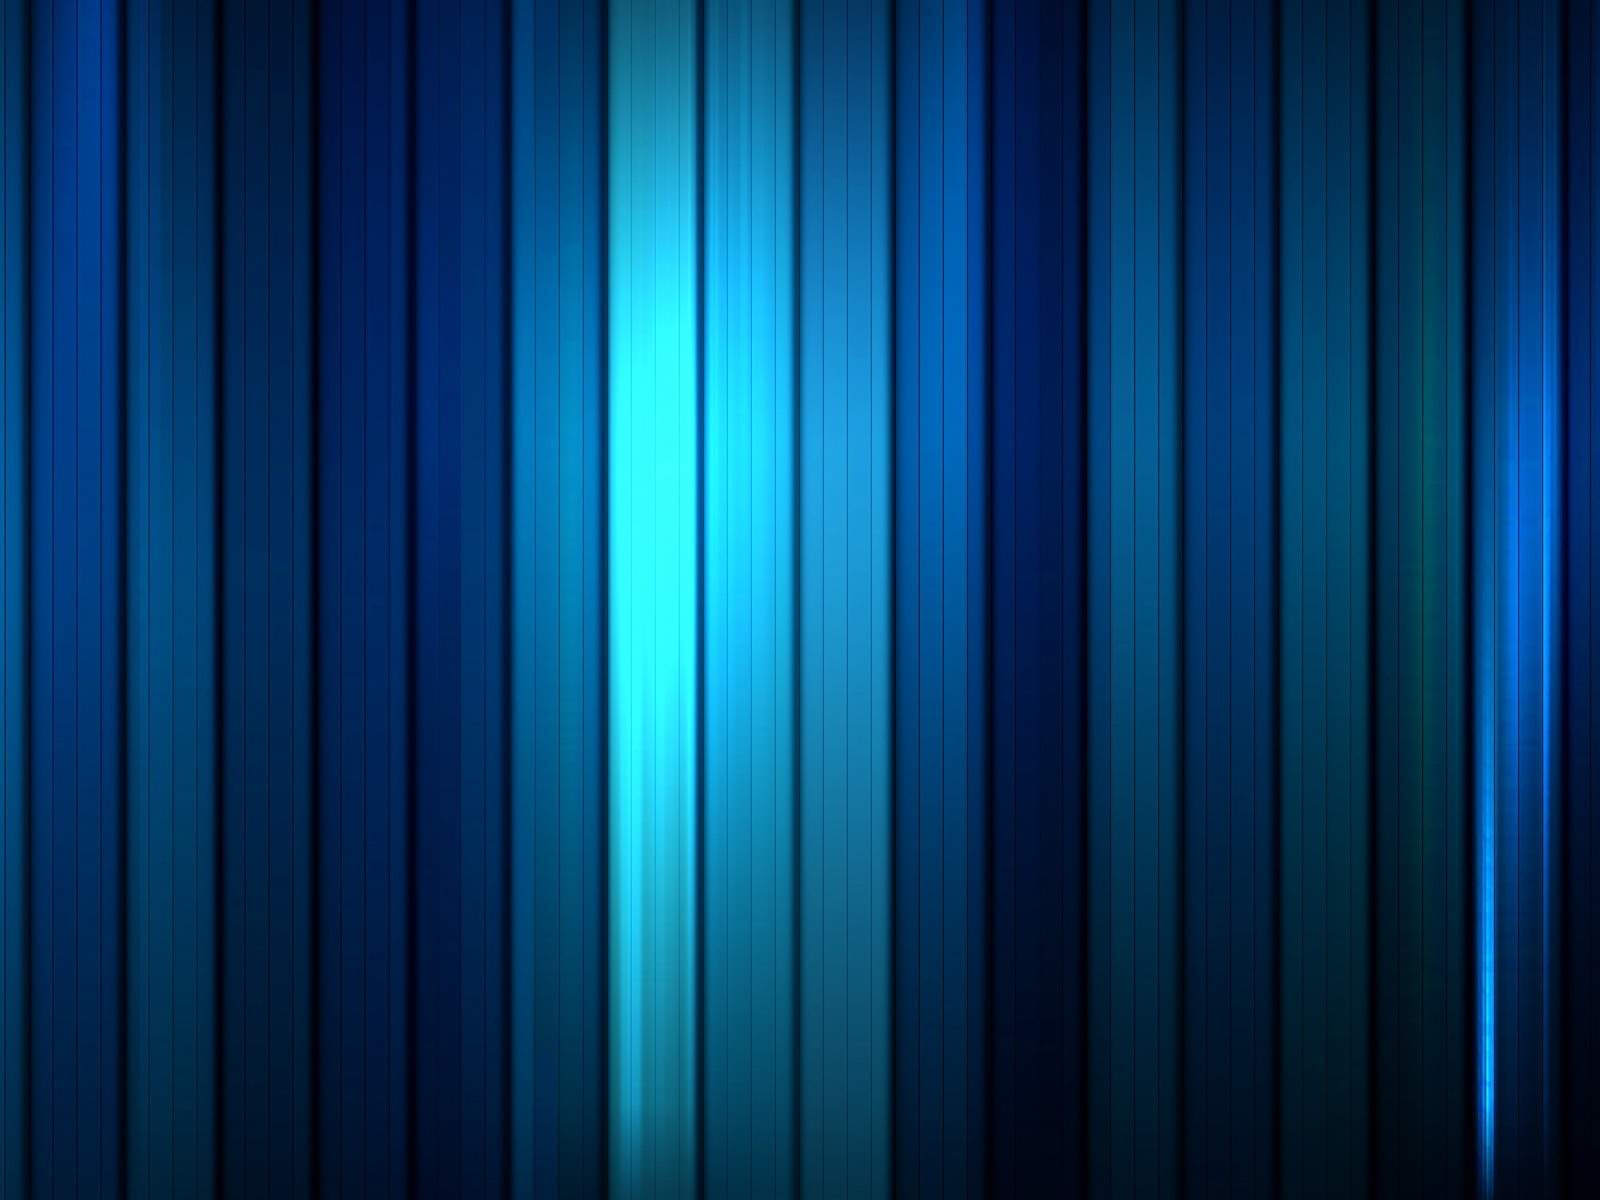 Black And White Wallpaper Blue Vertical Stripes